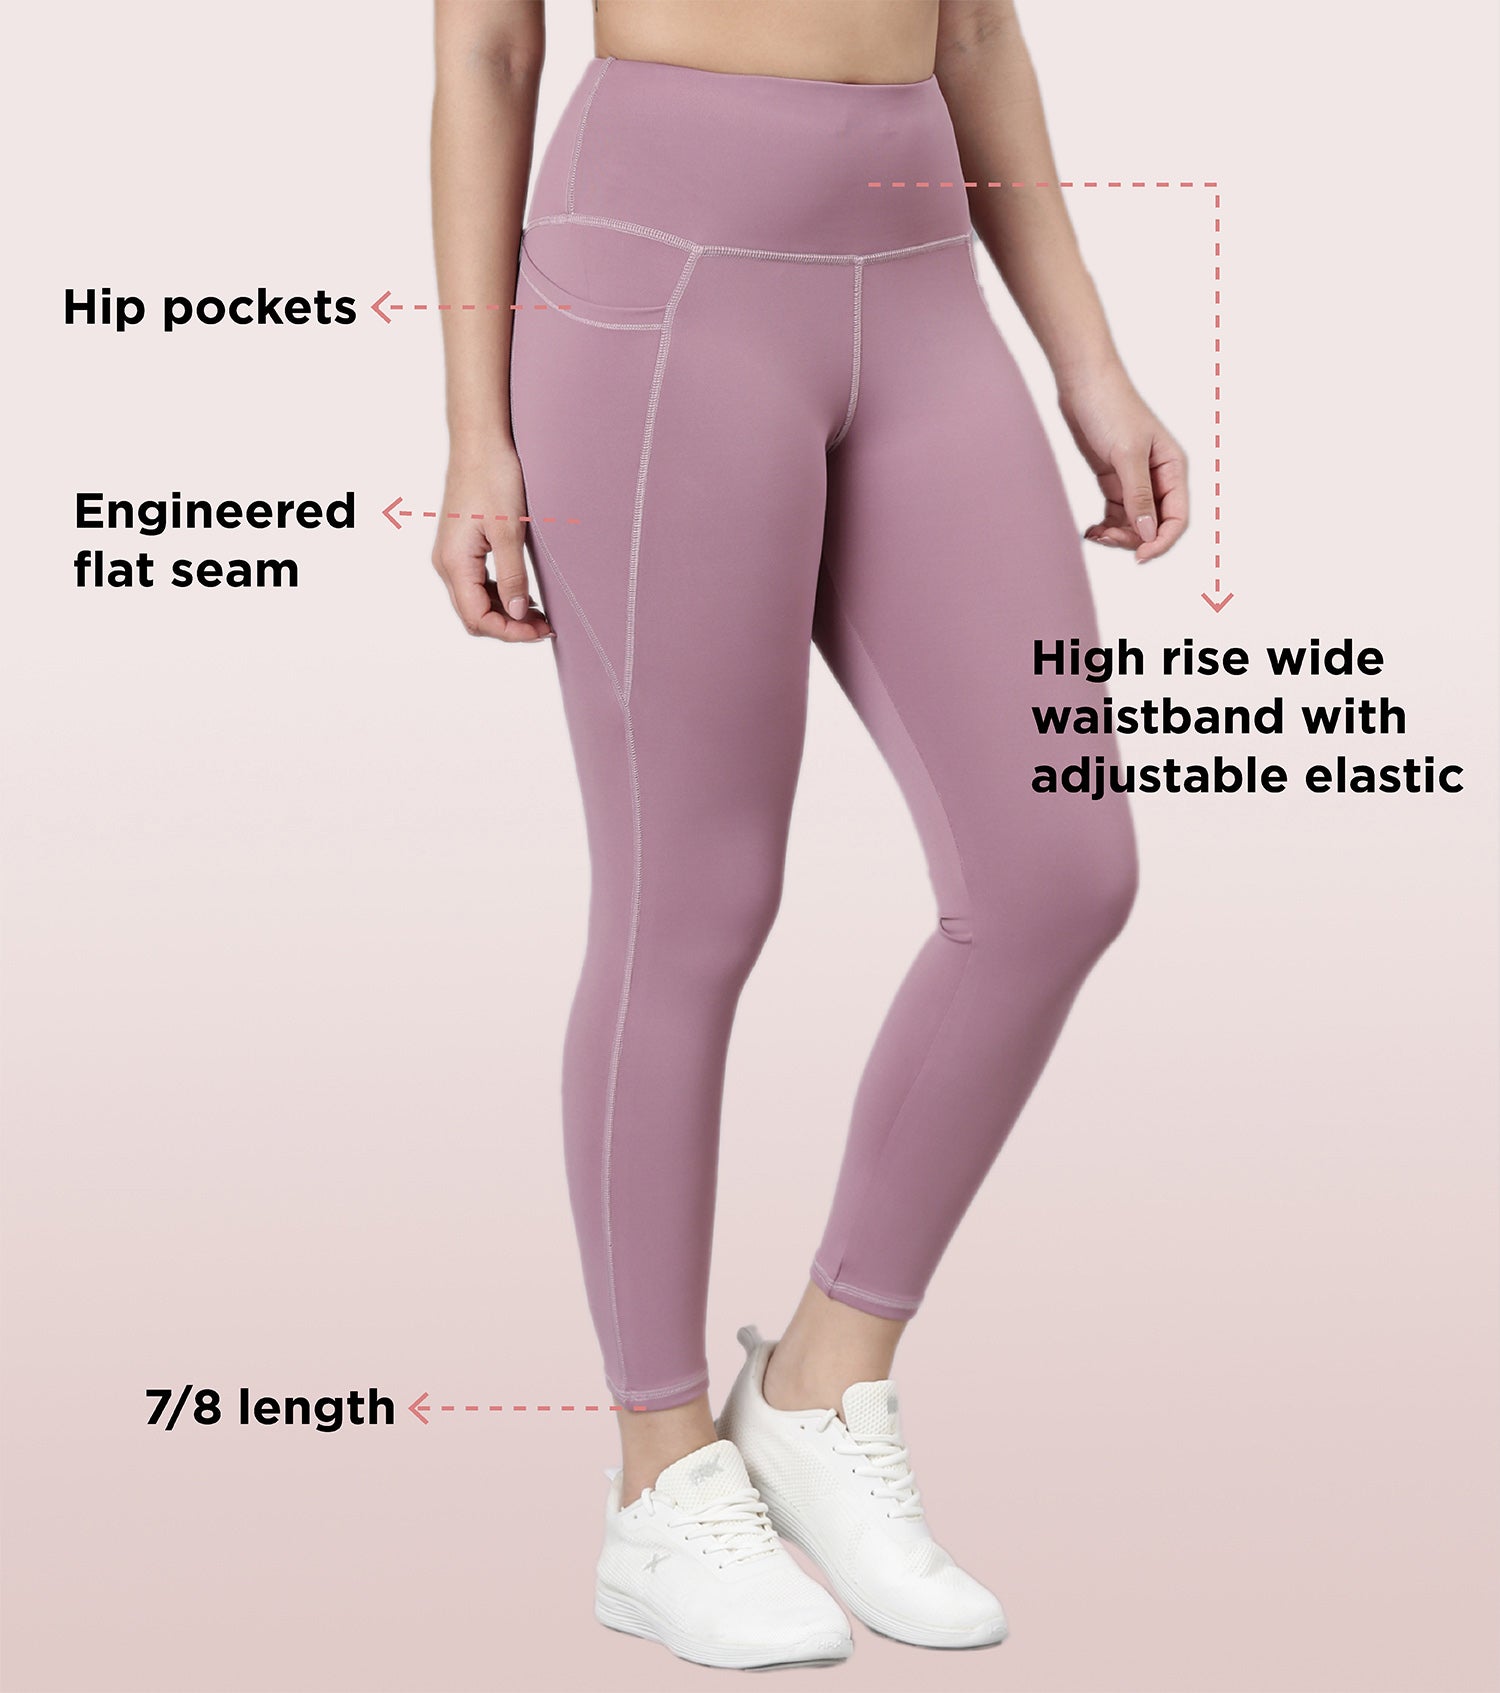 Enamor Basic Workout Legging | Dry Fit High Waist Workout Legging For Women | A605